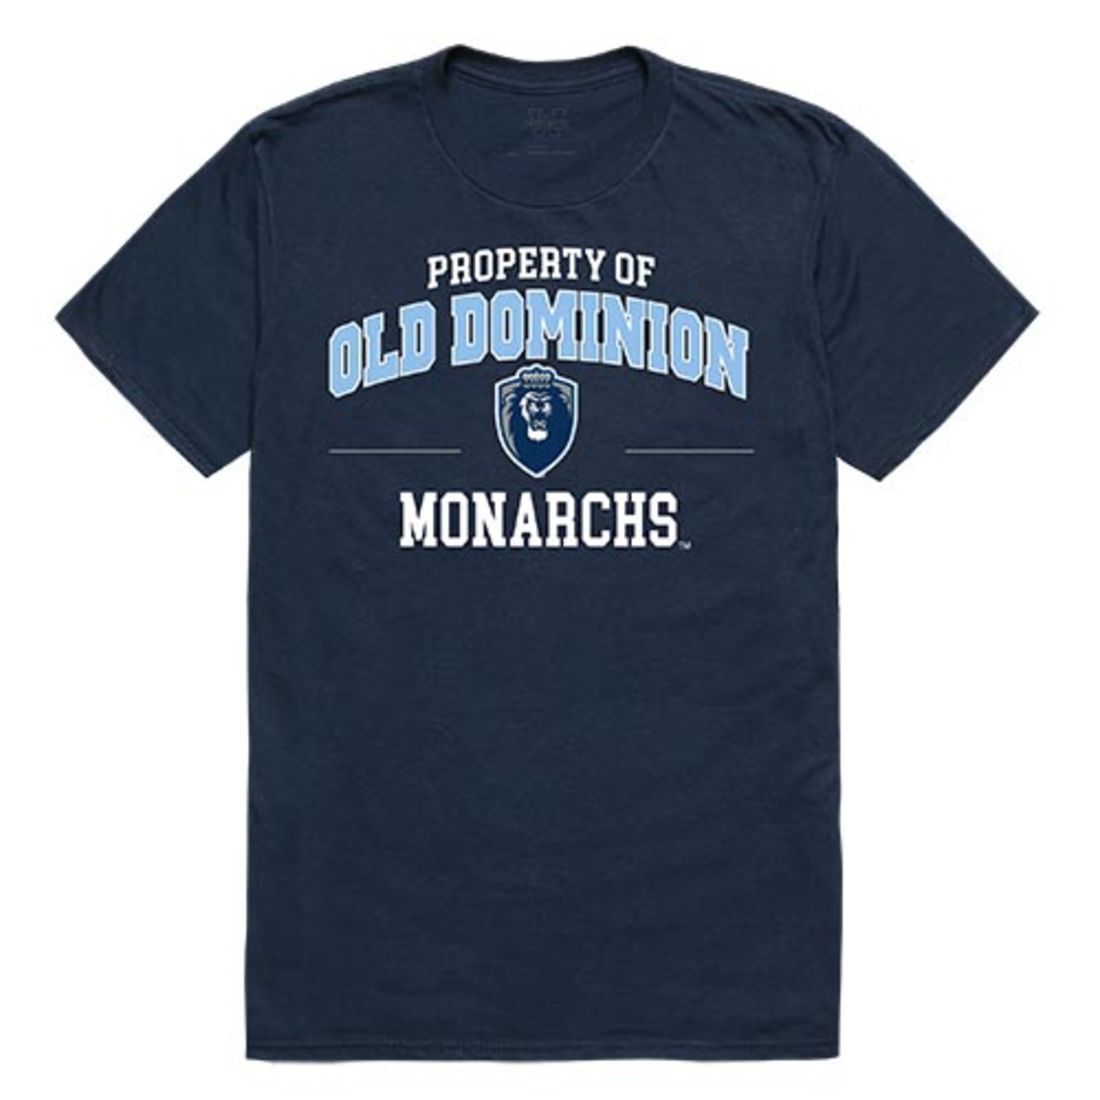 ODU Old Dominion University Monarchs Property T-Shirt Navy-Campus-Wardrobe